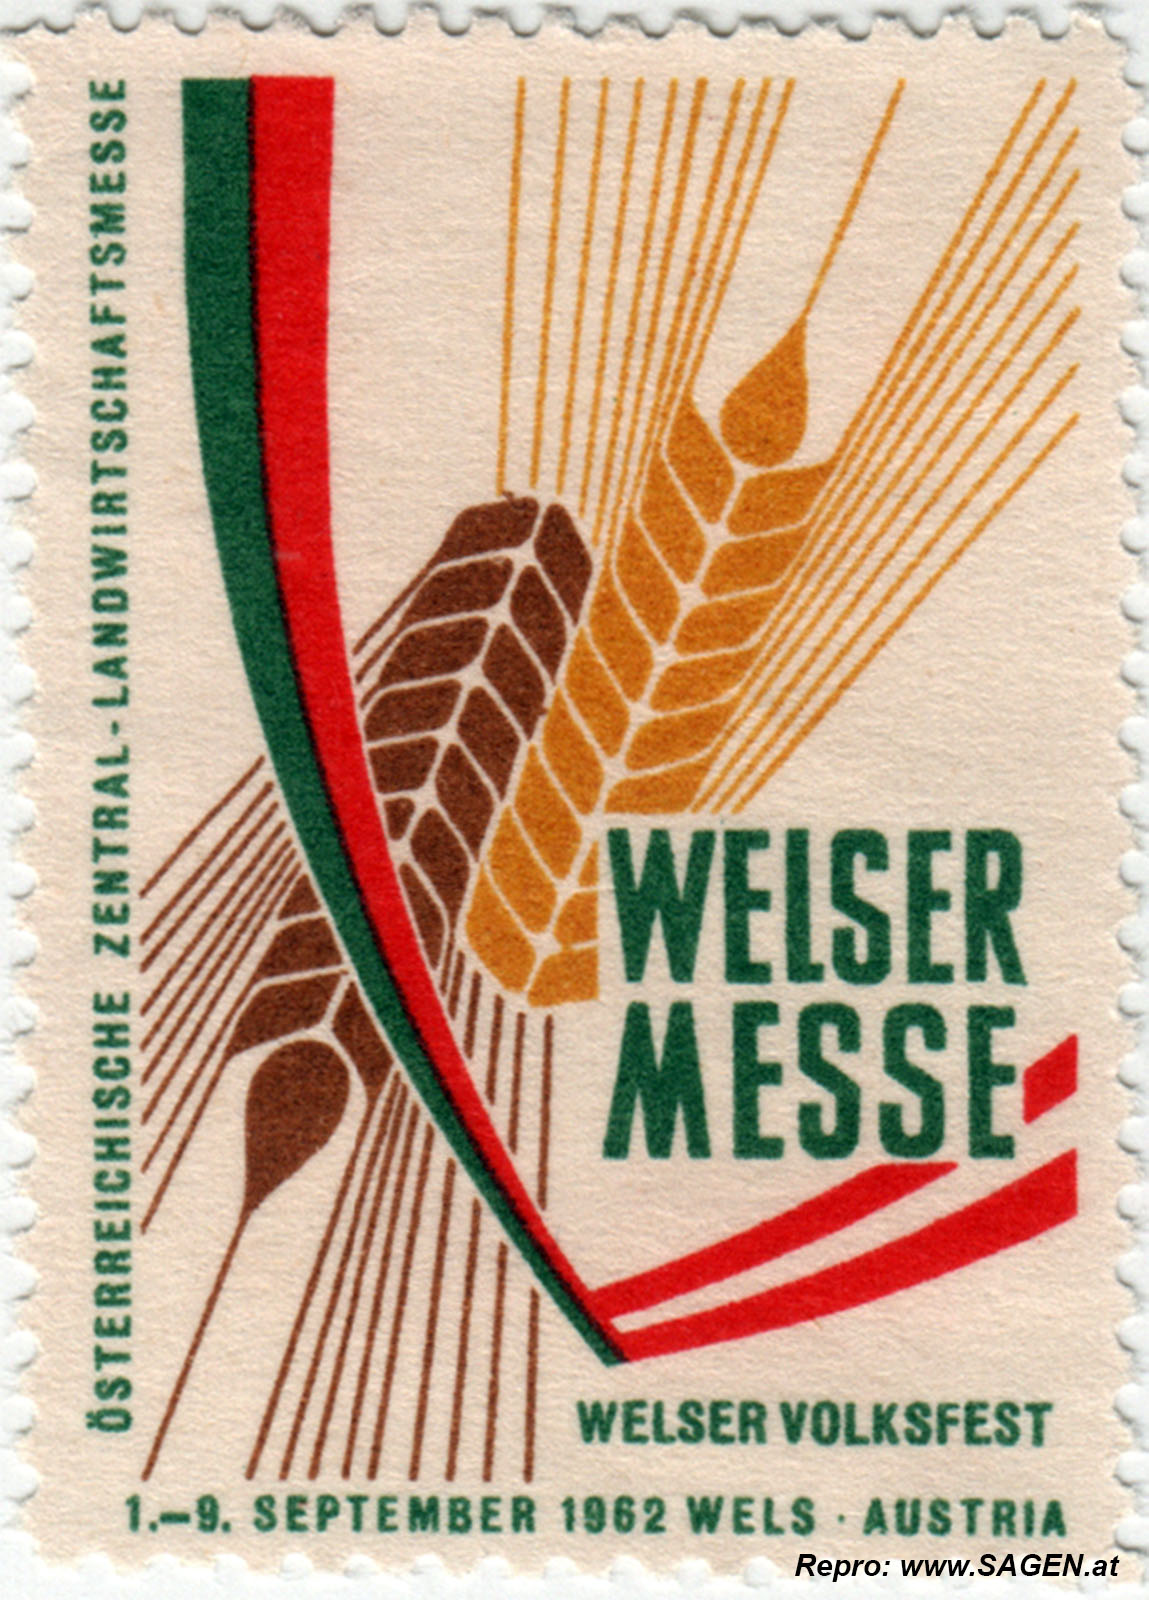 Reklamemarke Welser Messe 1962